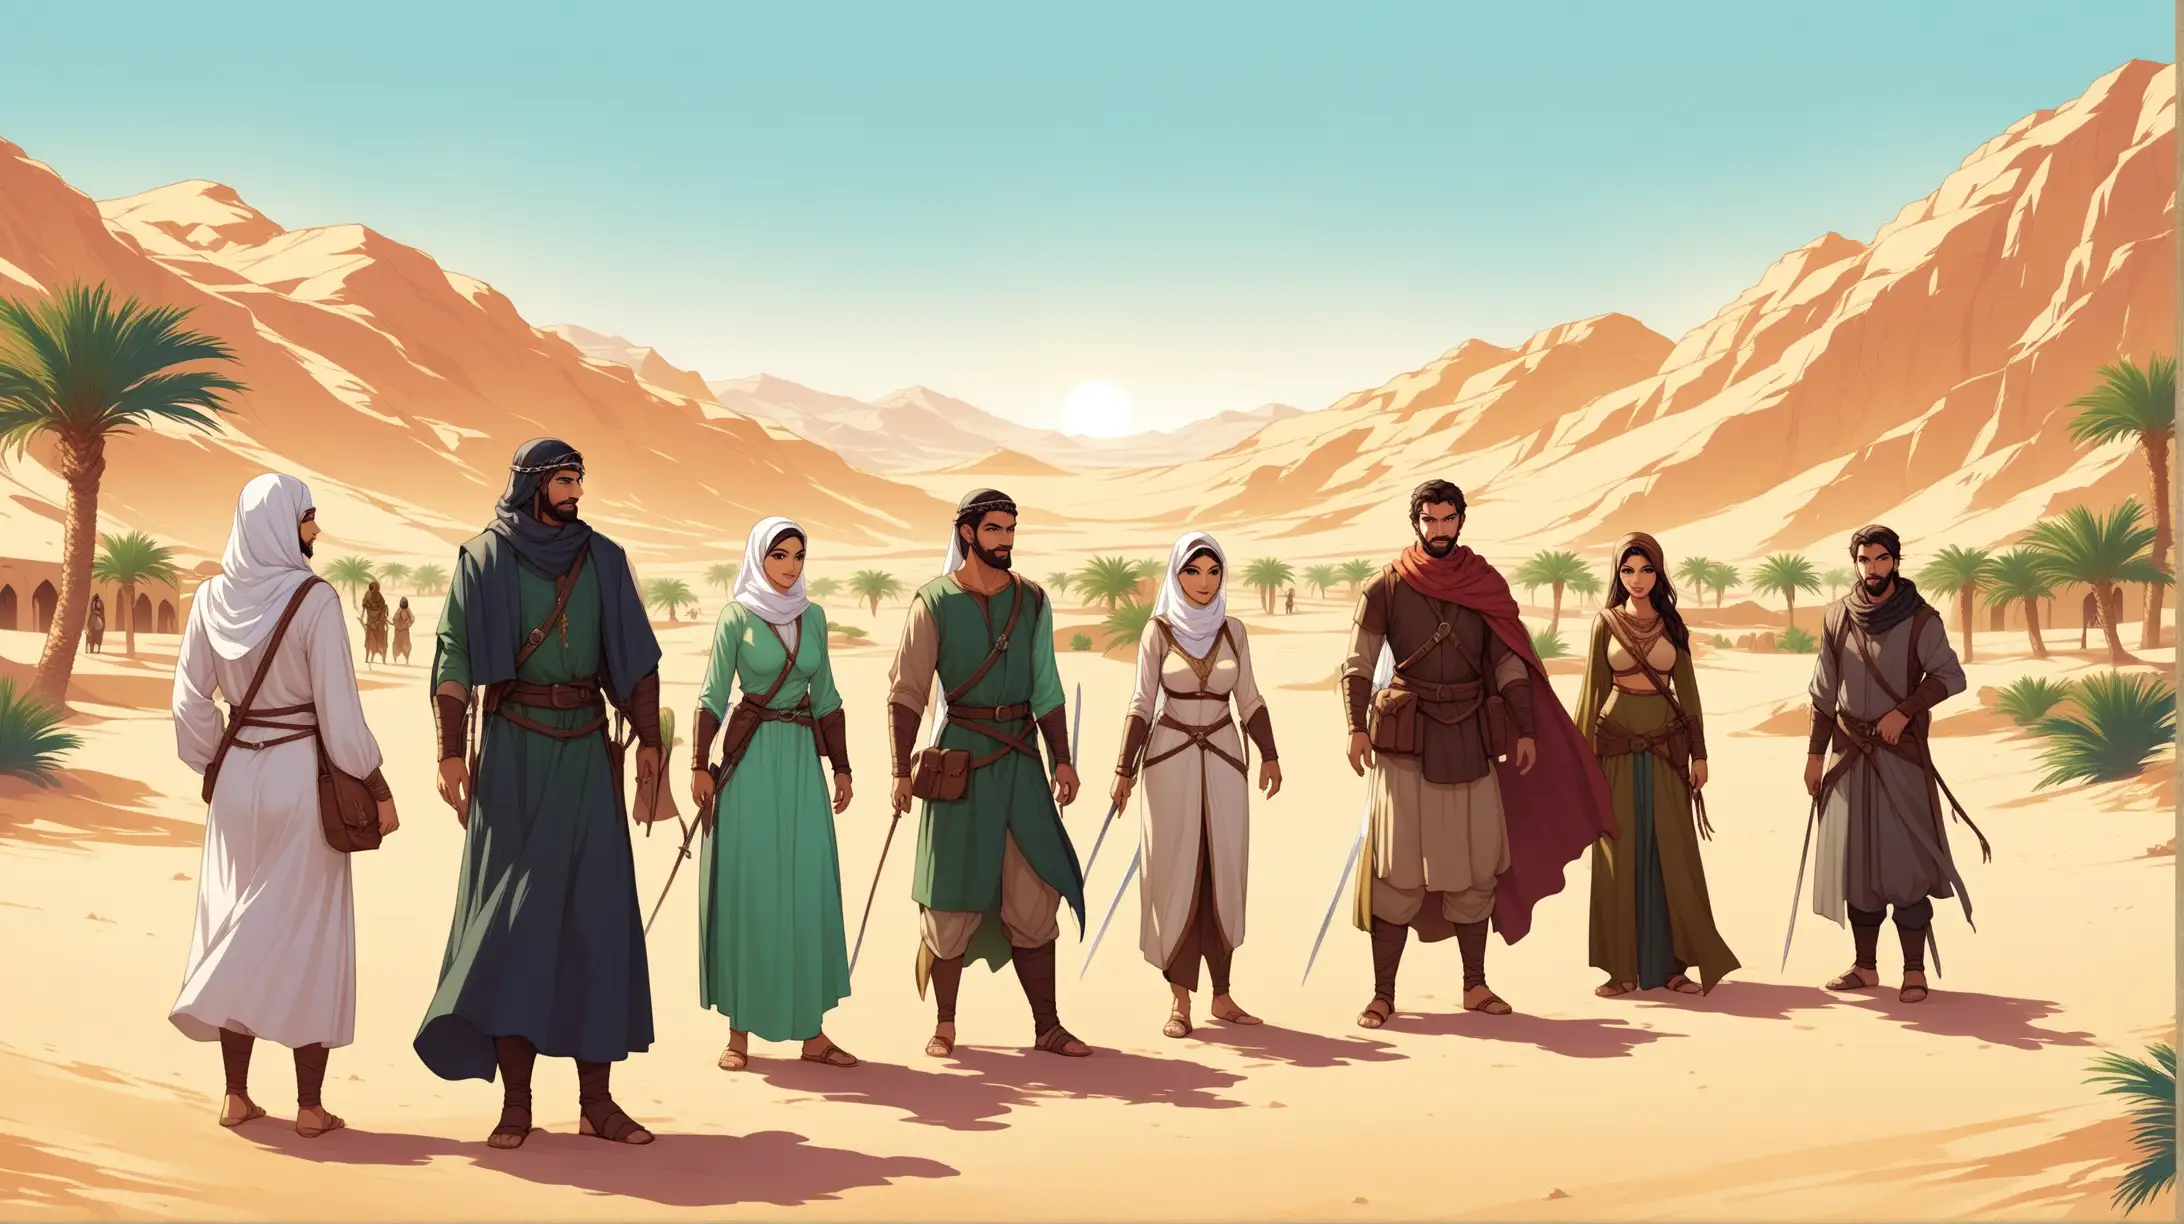 group of adventurers, women and men, Arabic Persian, desert oasis, Medieval fantasy